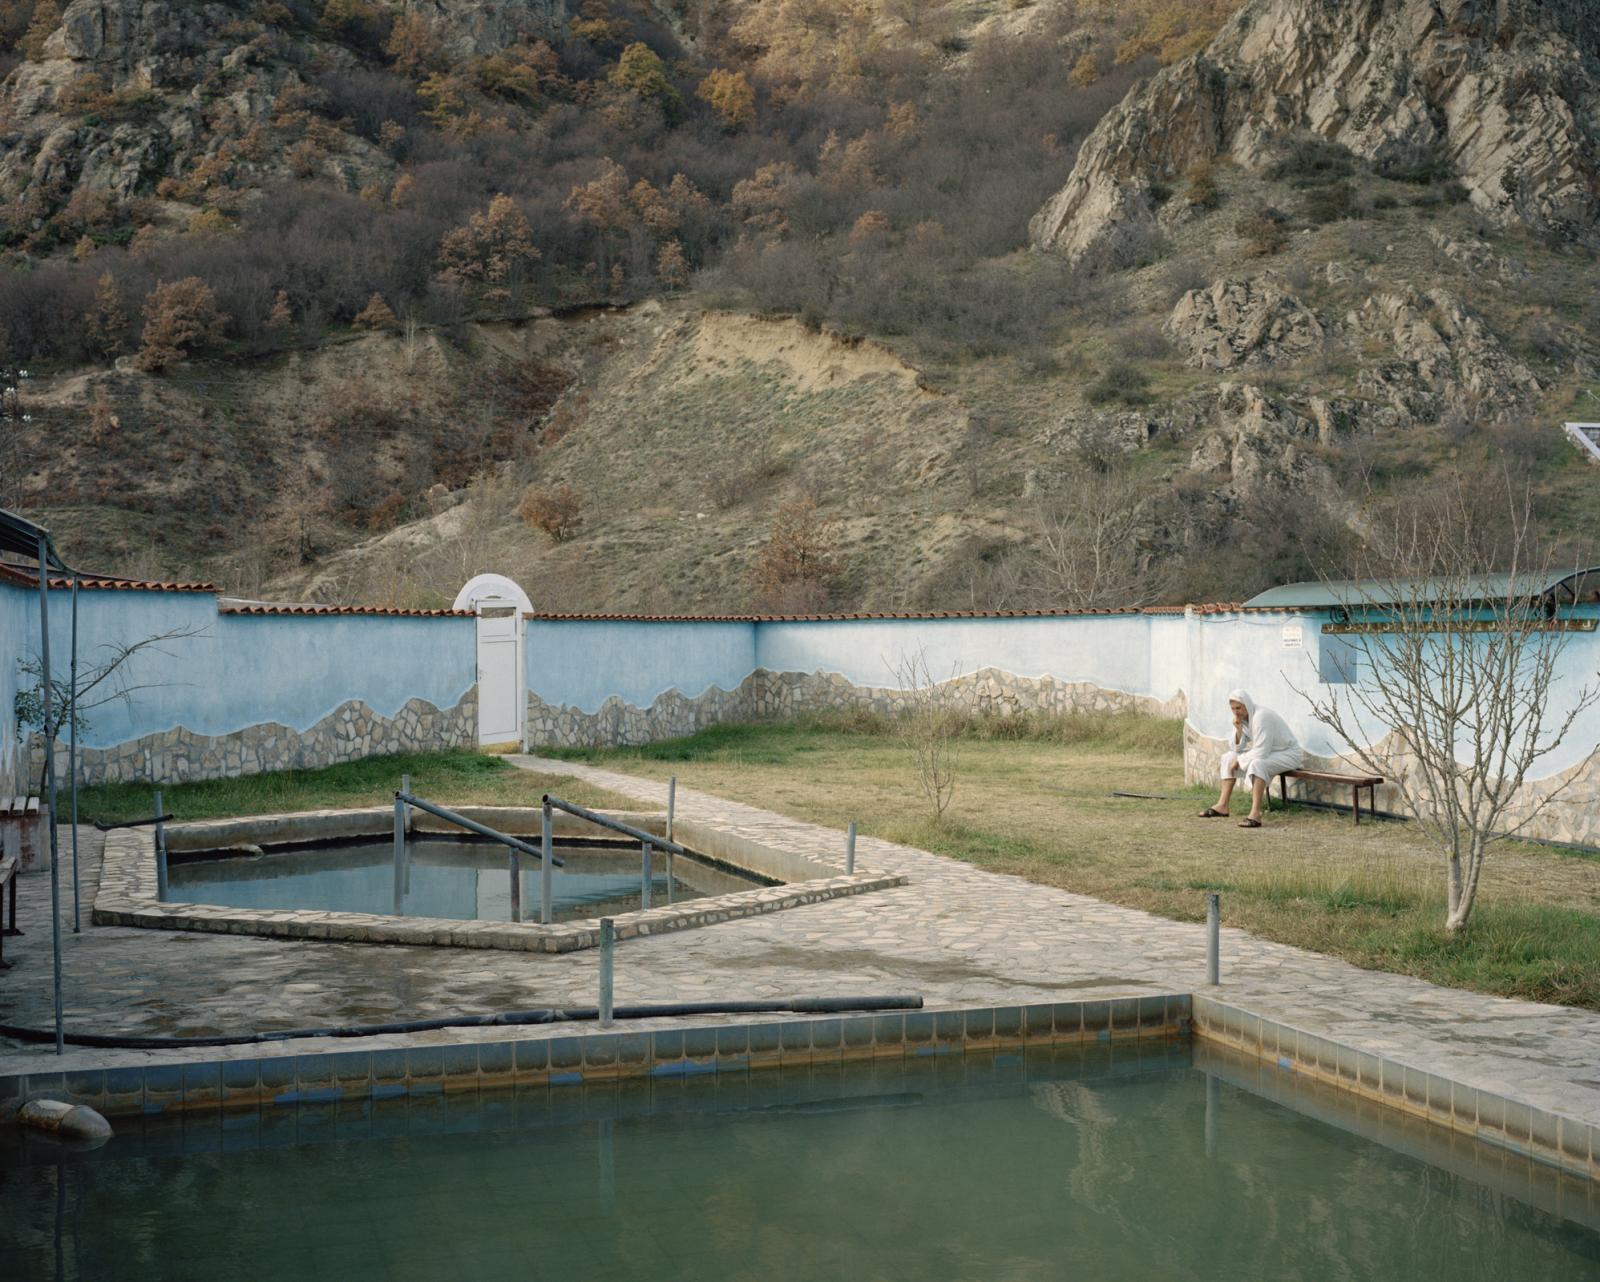 Domestic Borers of Europe -  Bulgaria, Rupite. Thermal bath facilities. Close to the...